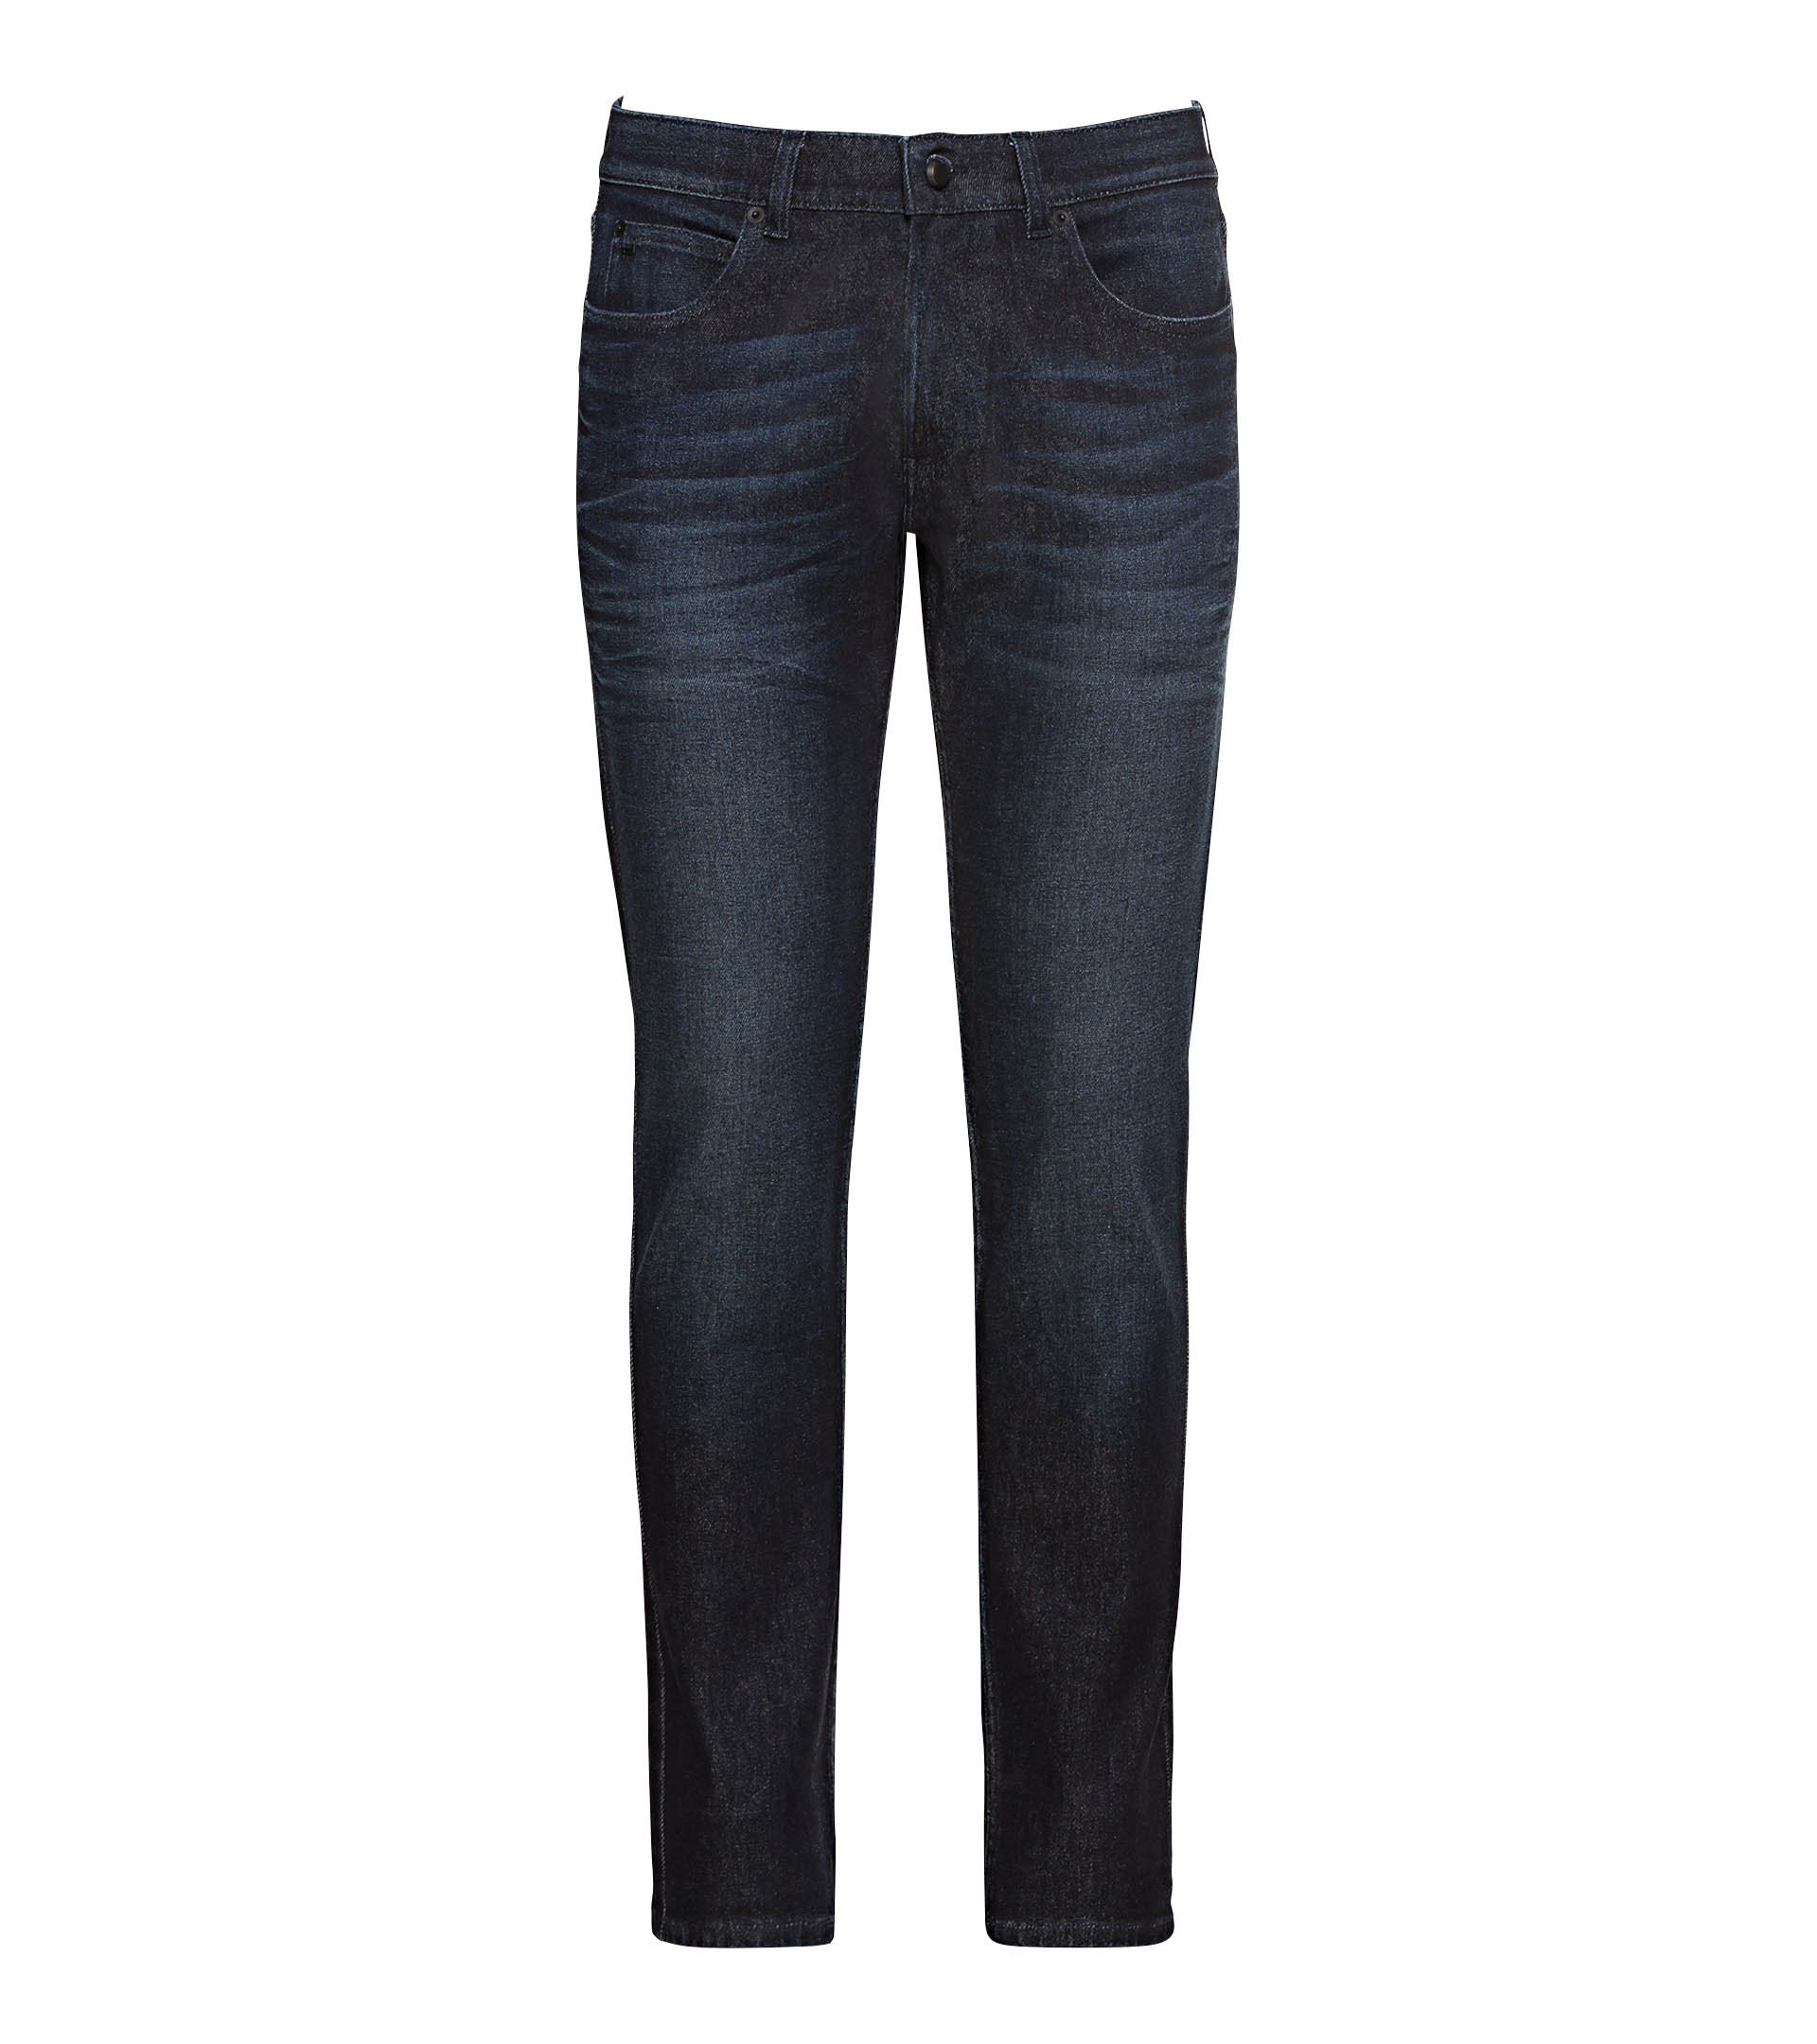 Denim Jeans Background Image & Photo (Free Trial) | Bigstock